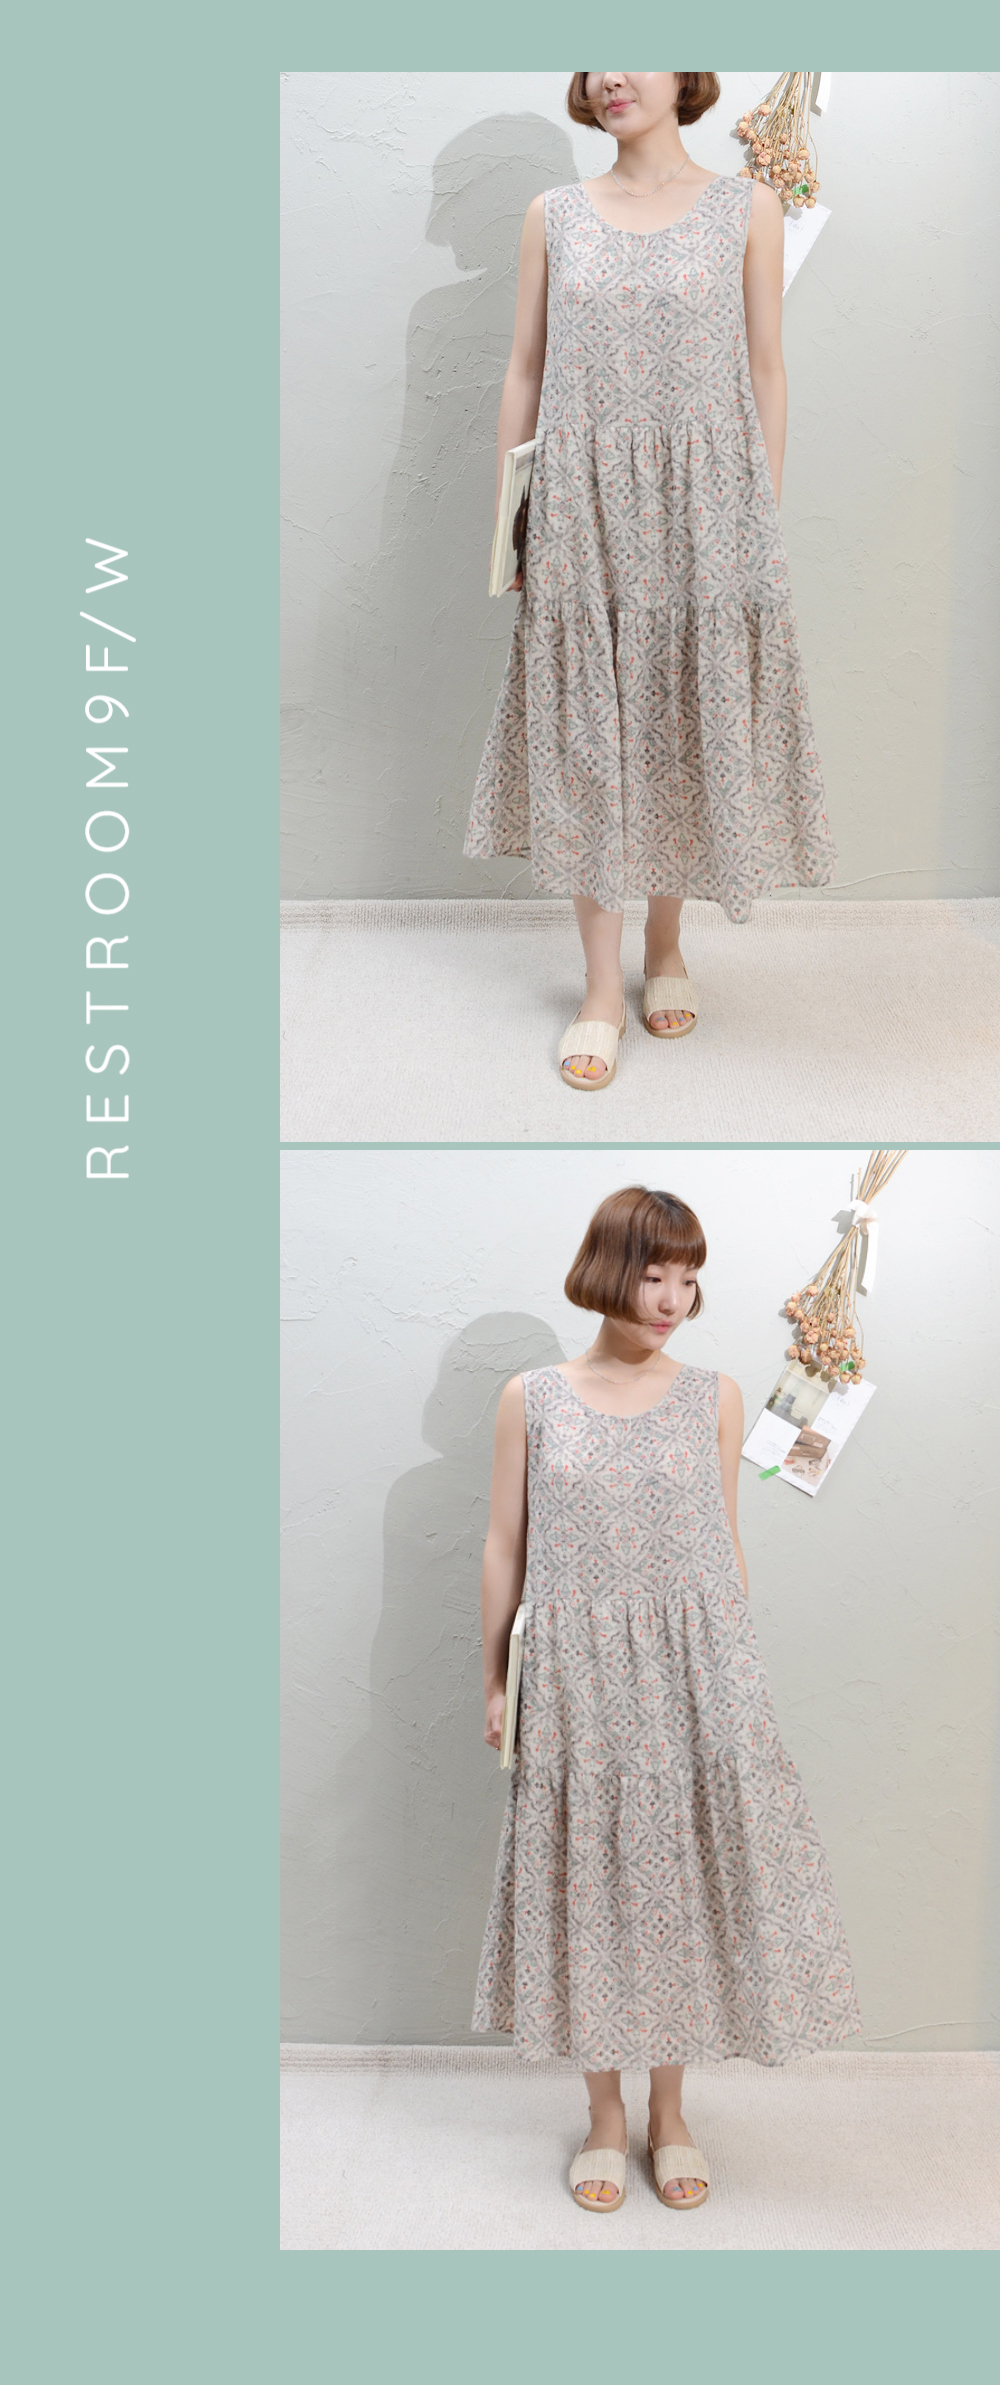 dress model image-S1L30